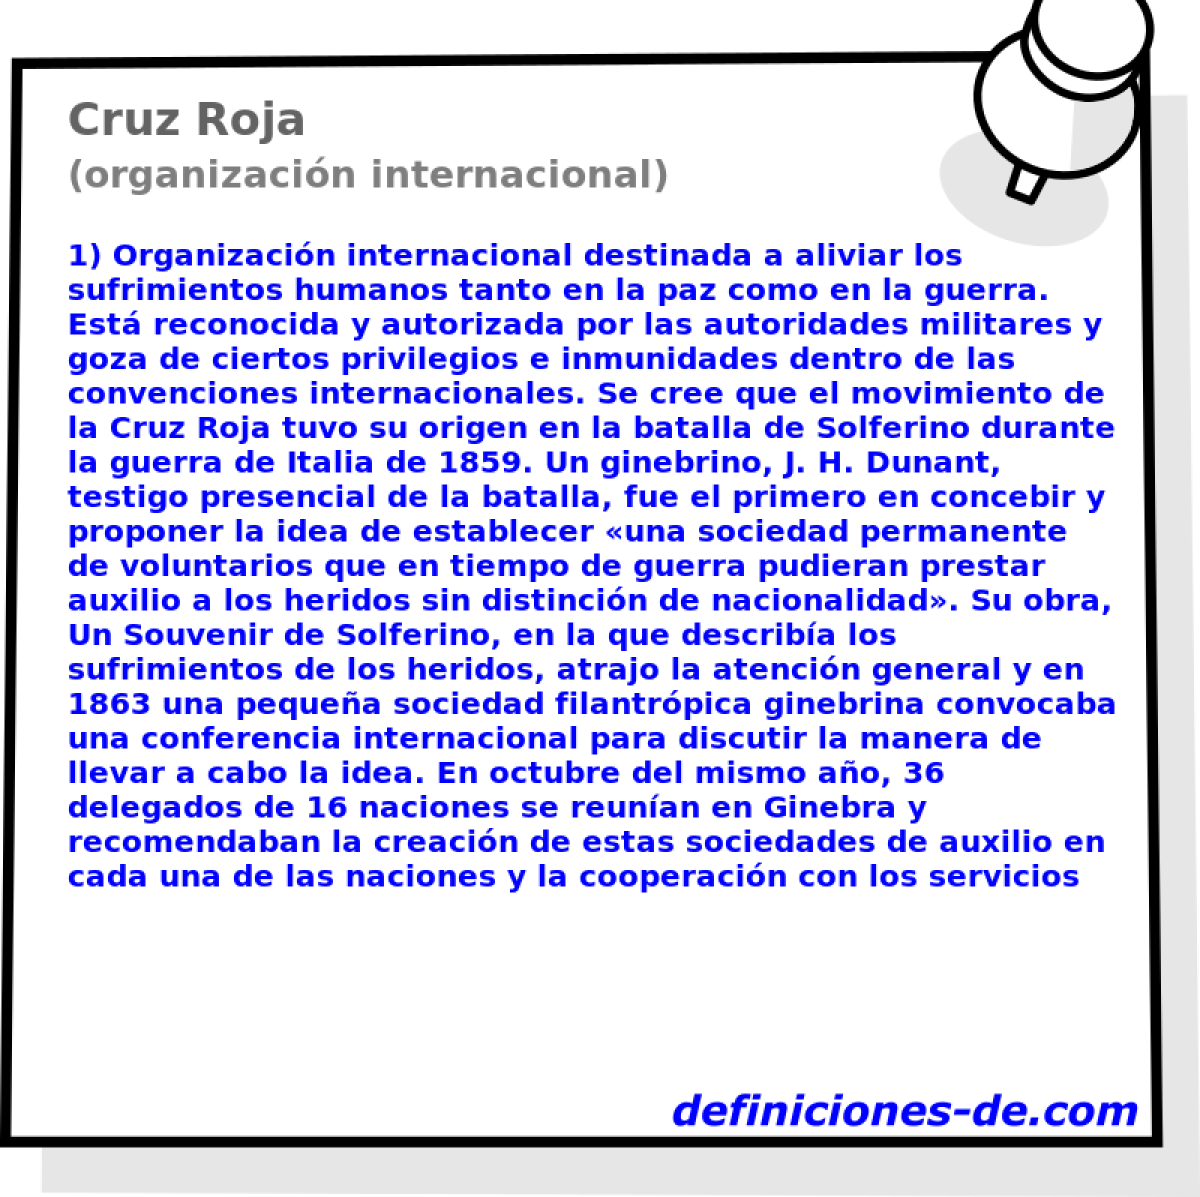 Cruz Roja (organizacin internacional)